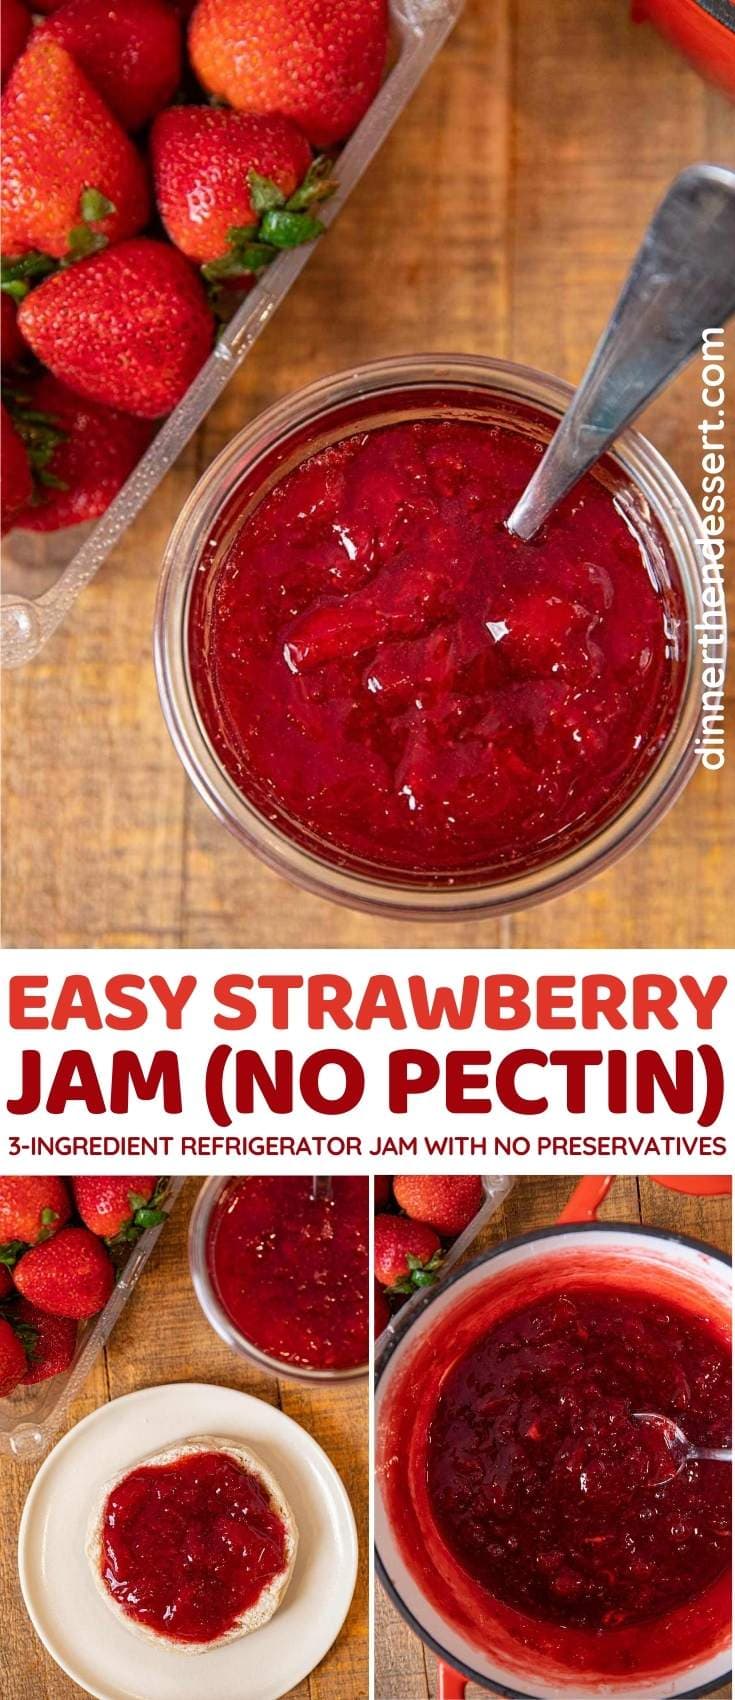 Strawberry Jam collage